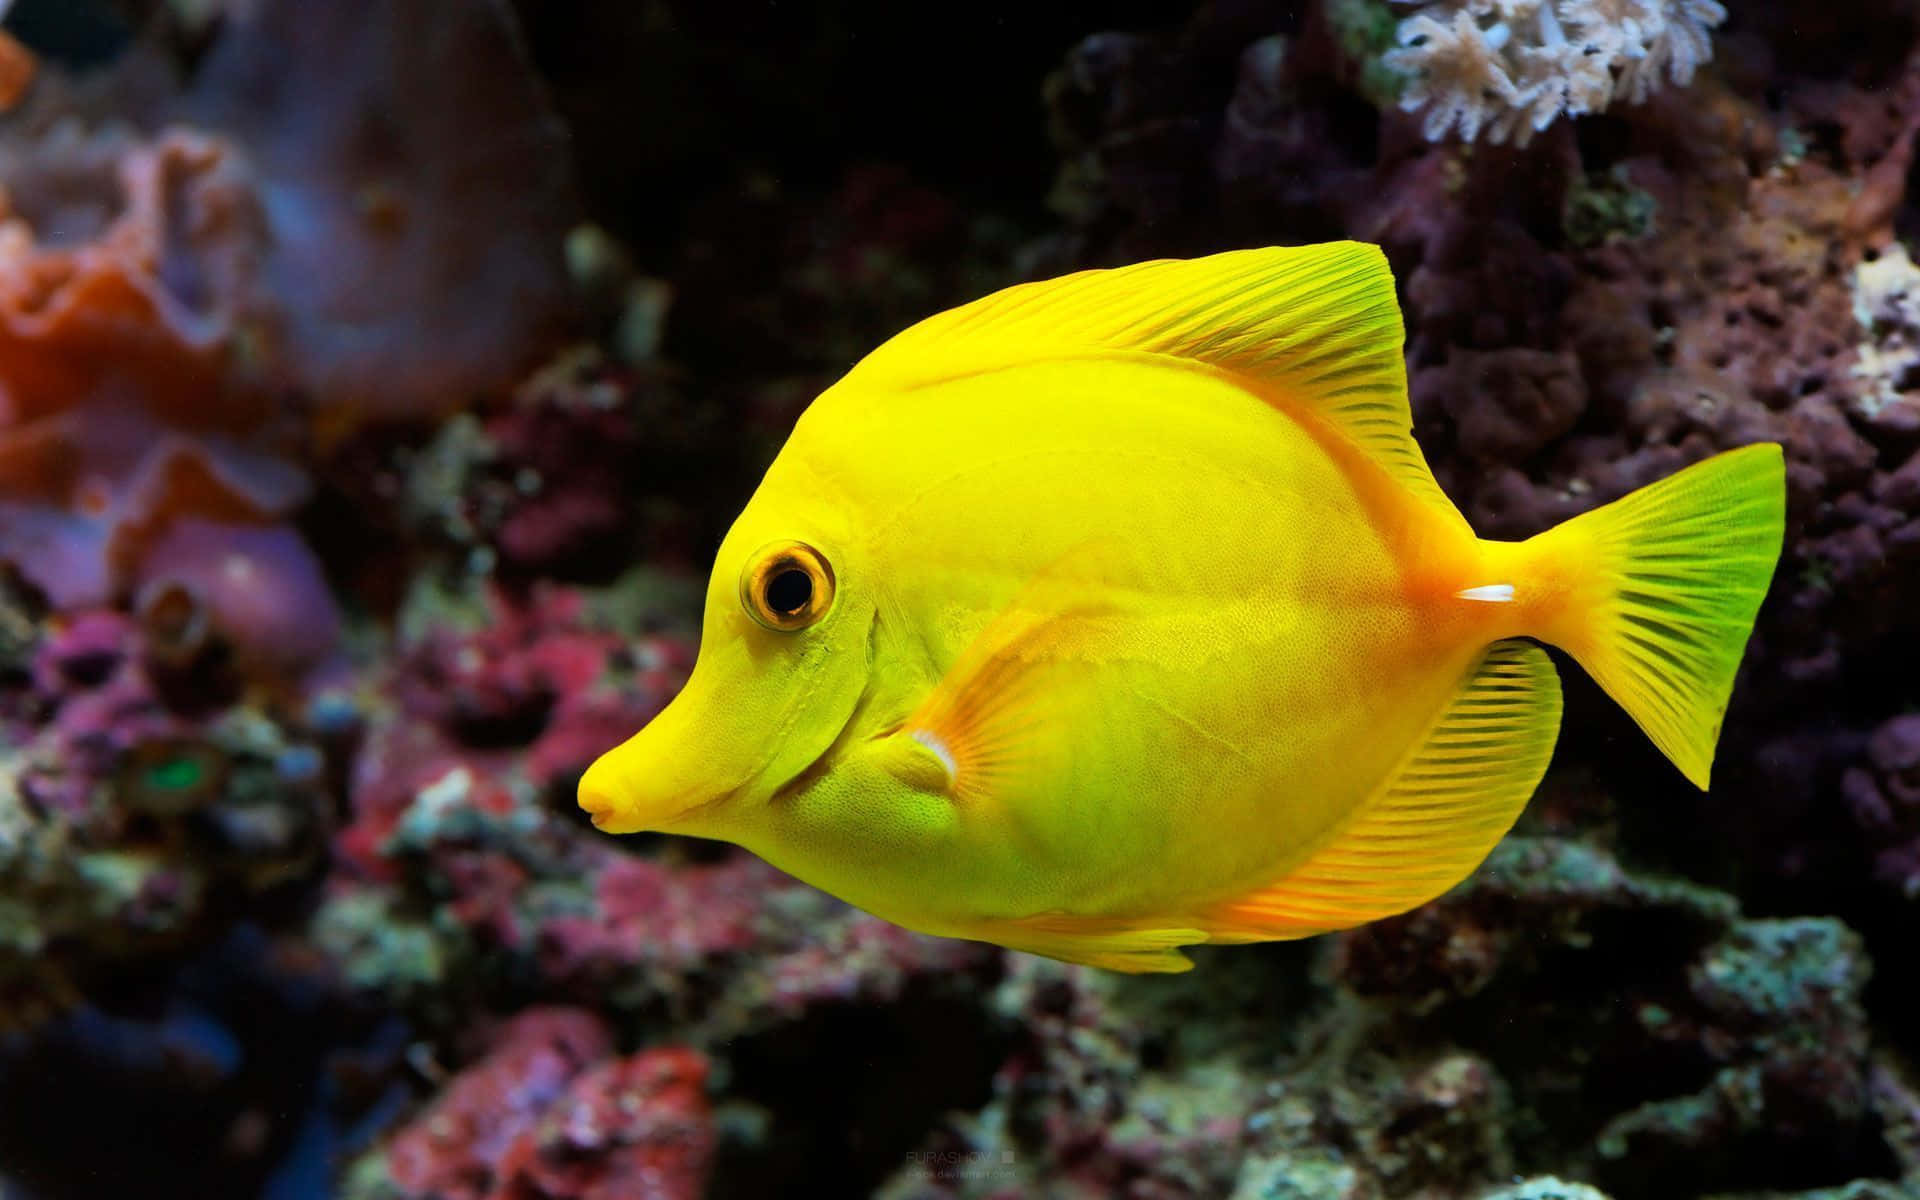 A Yellow Fish Swimming In An Aquarium